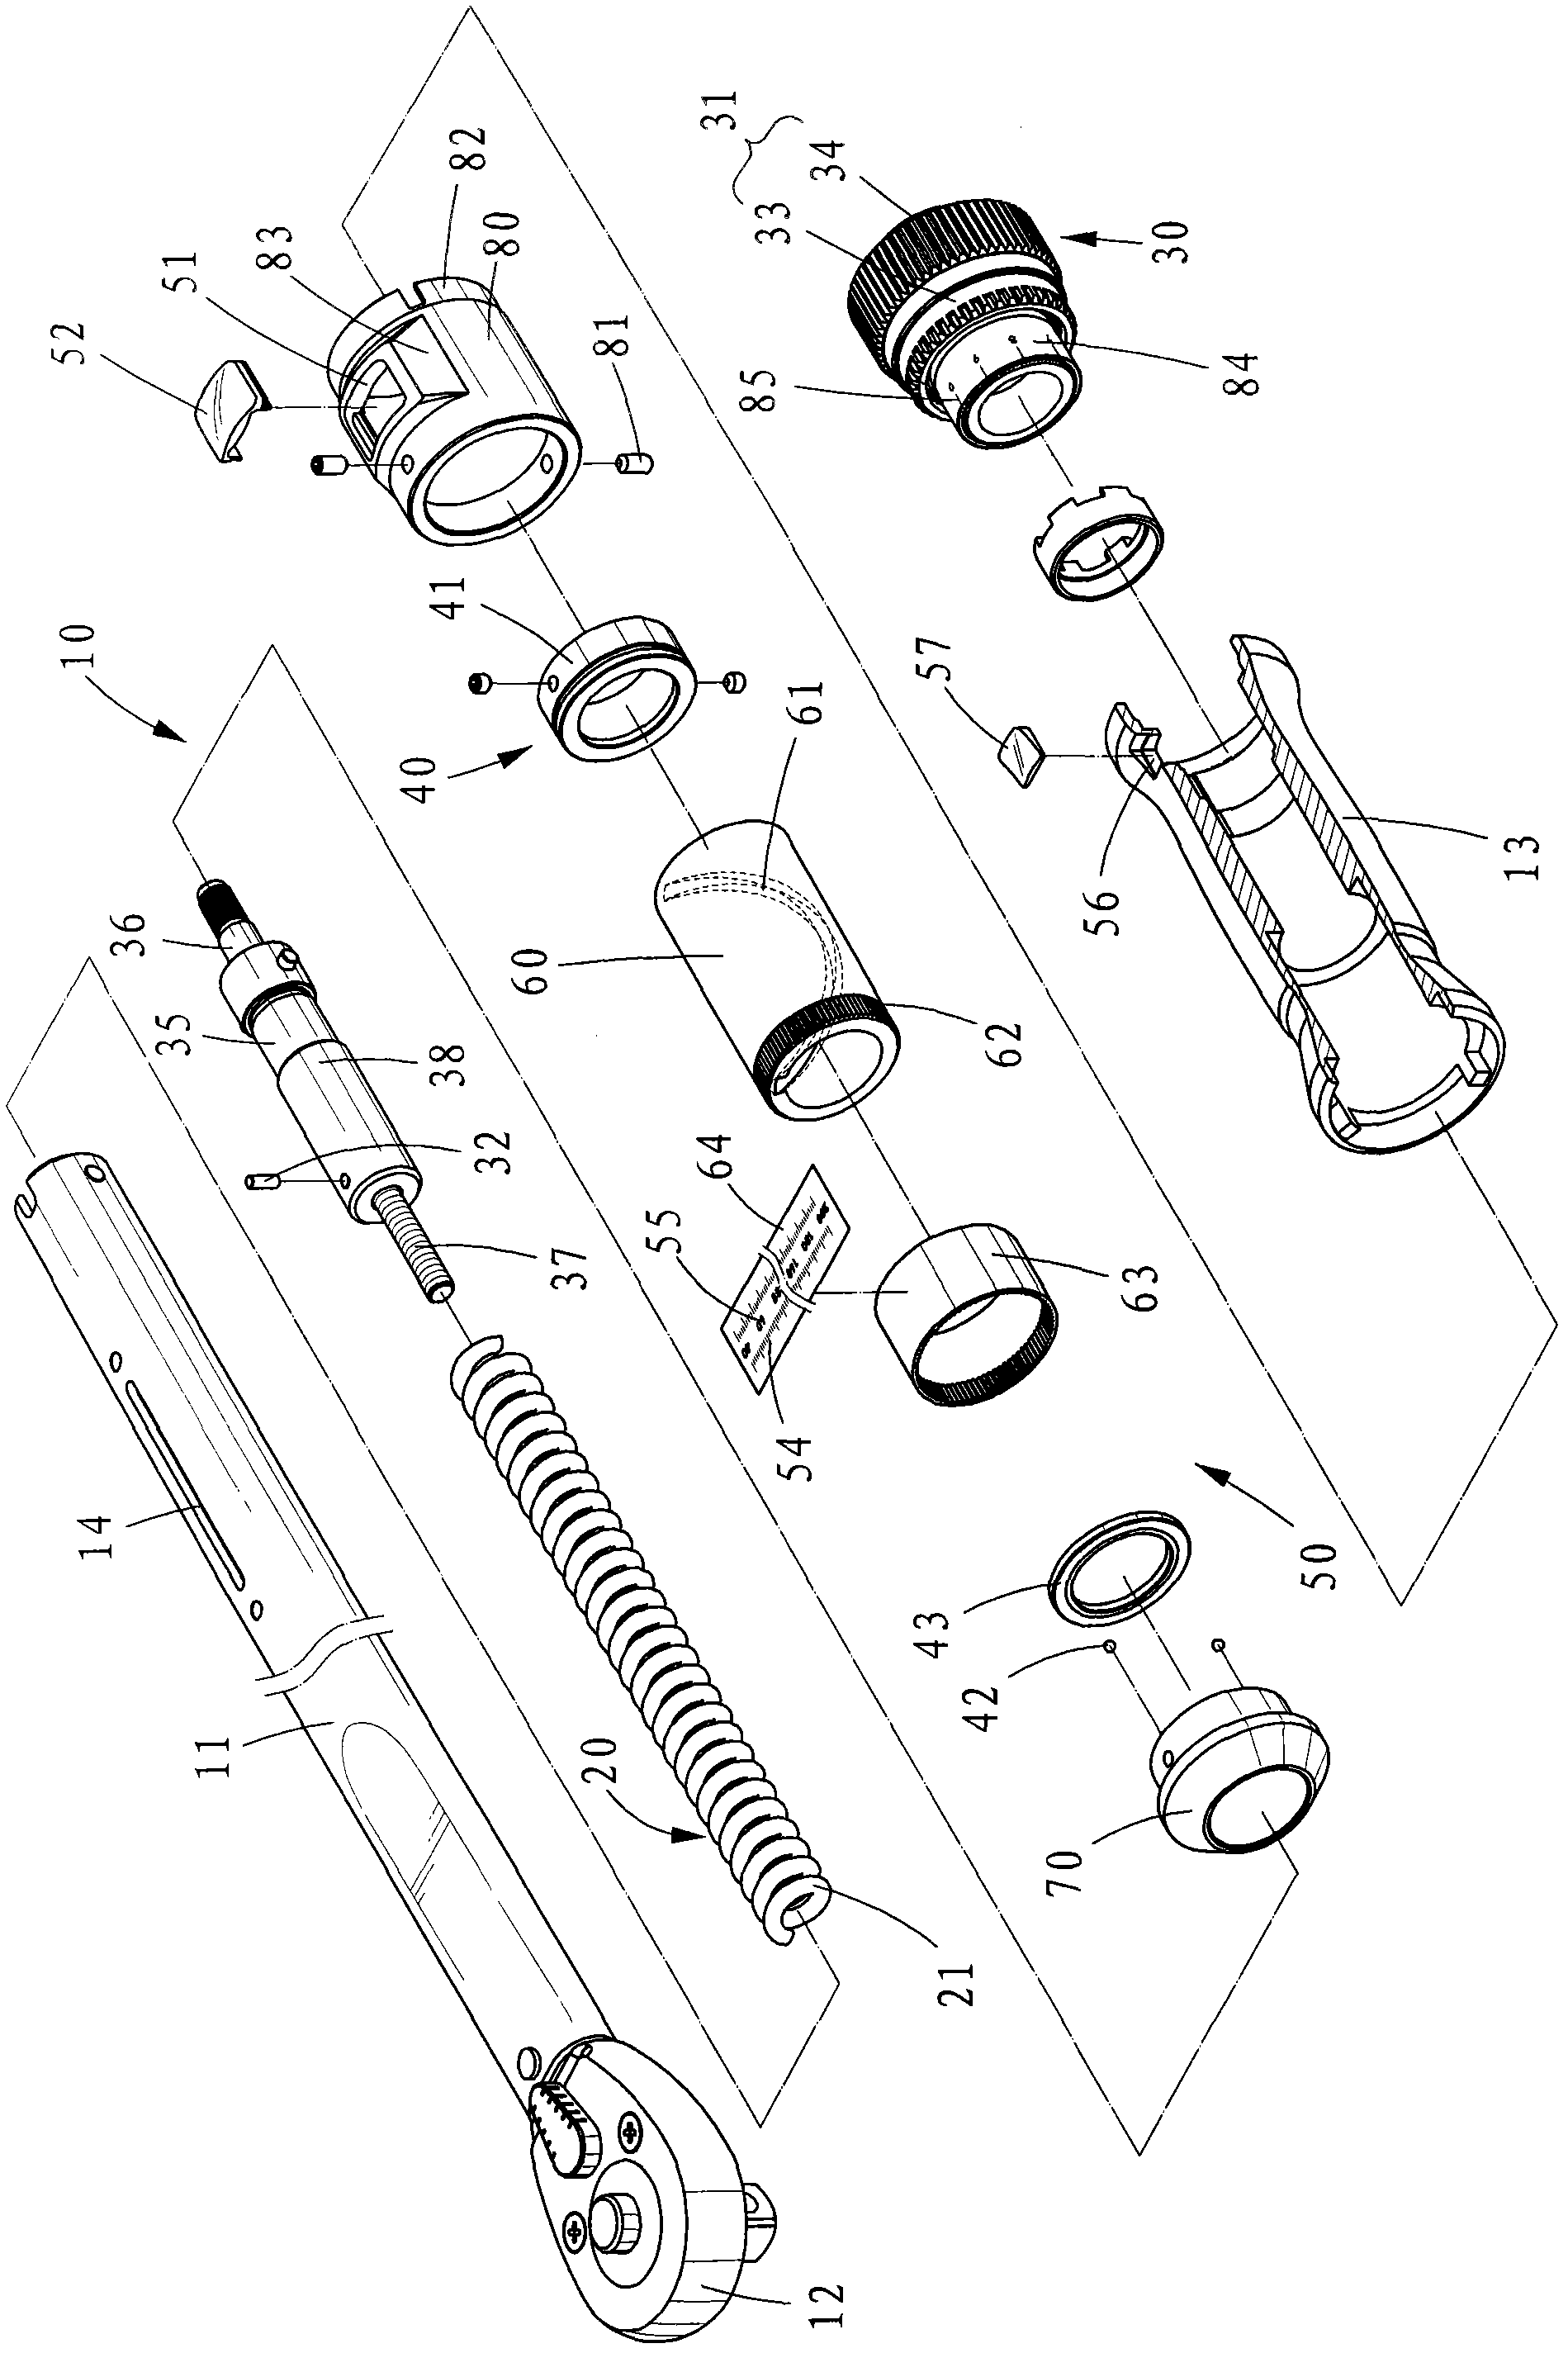 Torque measuring mechanism for spanner